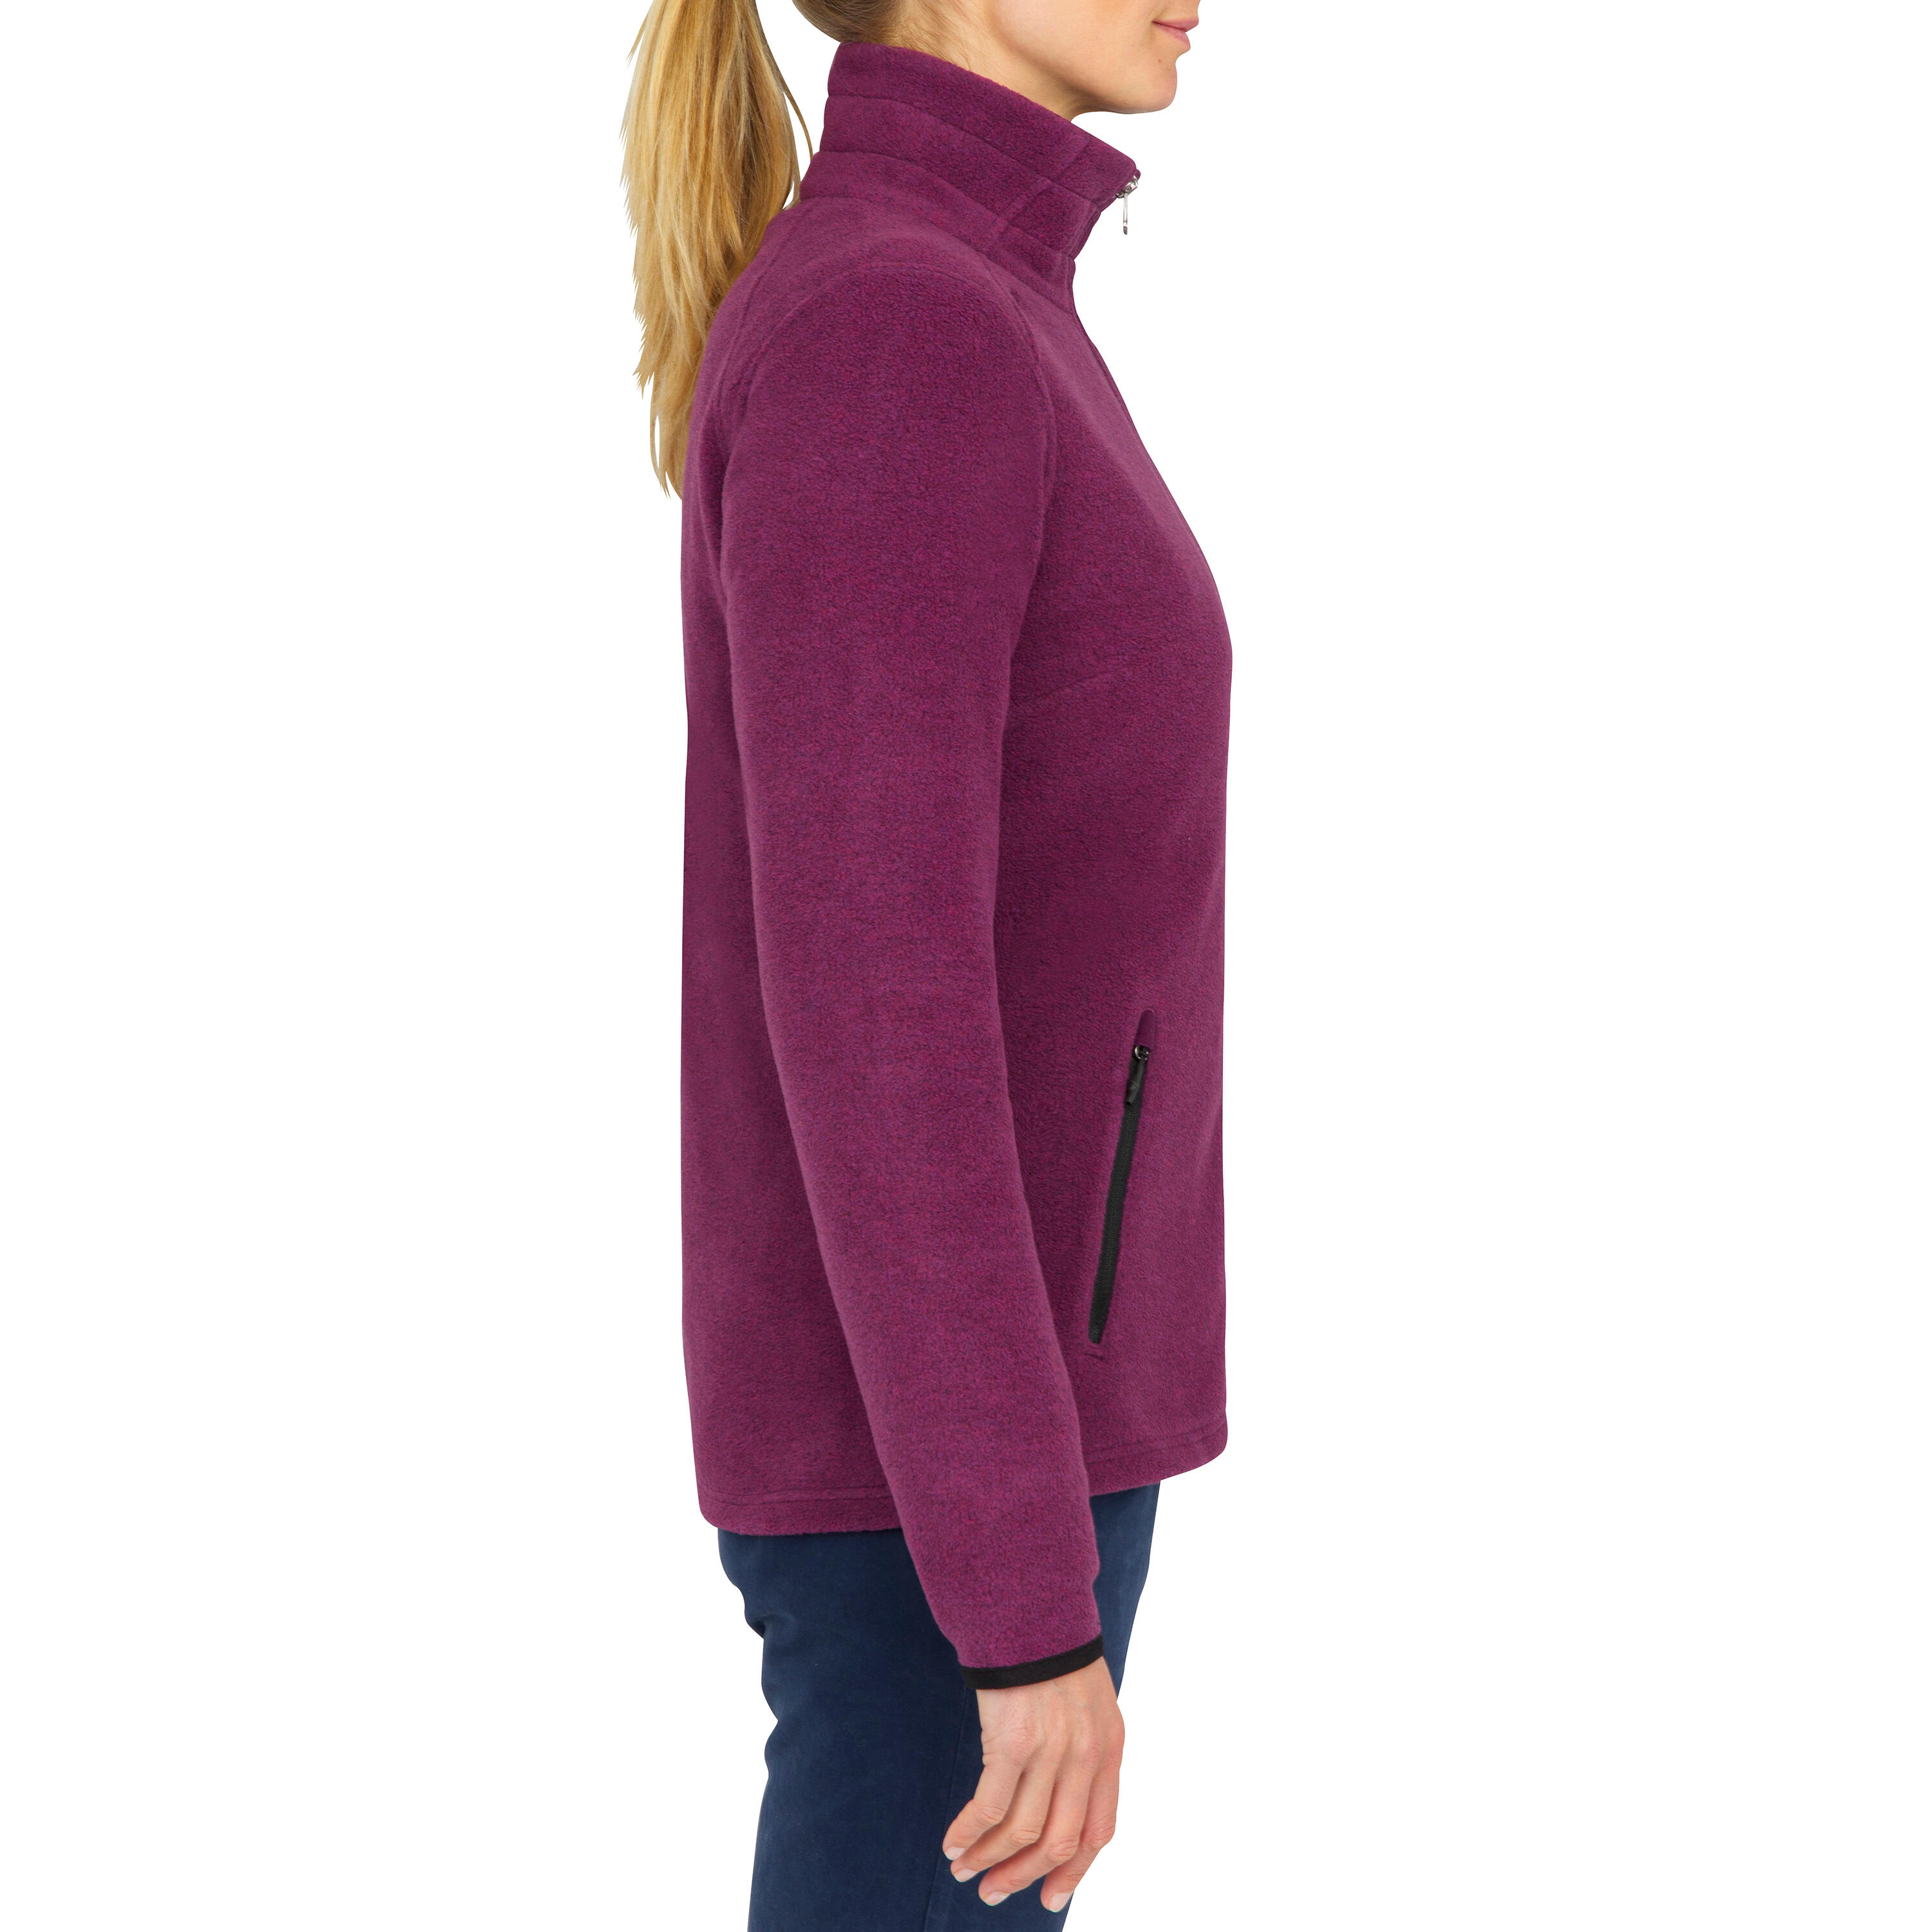 Women warm fleece sailing jacket 100 - Mottled dark Violet 4/10